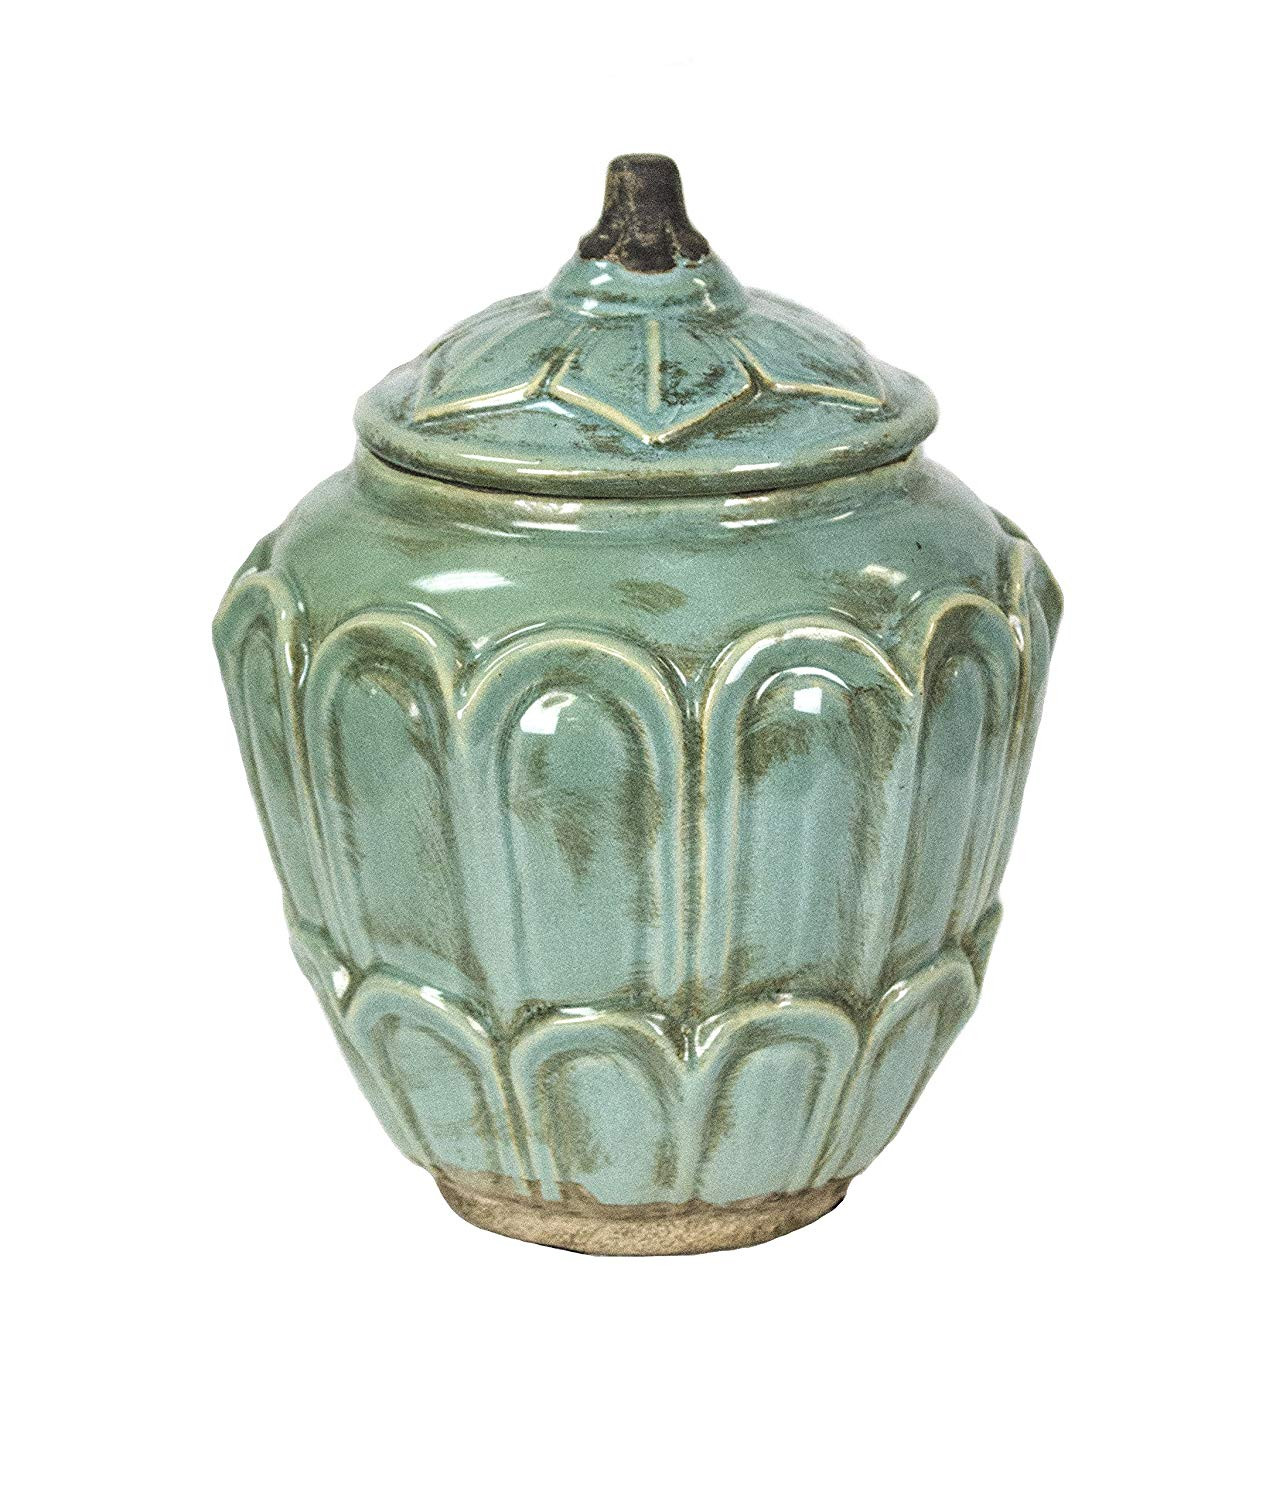 17 Fashionable Blue Ceramic Vase 2024 free download blue ceramic vase of amazon com sagebrook home 11477 decorative ceramic covered jar with regard to amazon com sagebrook home 11477 decorative ceramic covered jar antique blue terracotta 6 5 